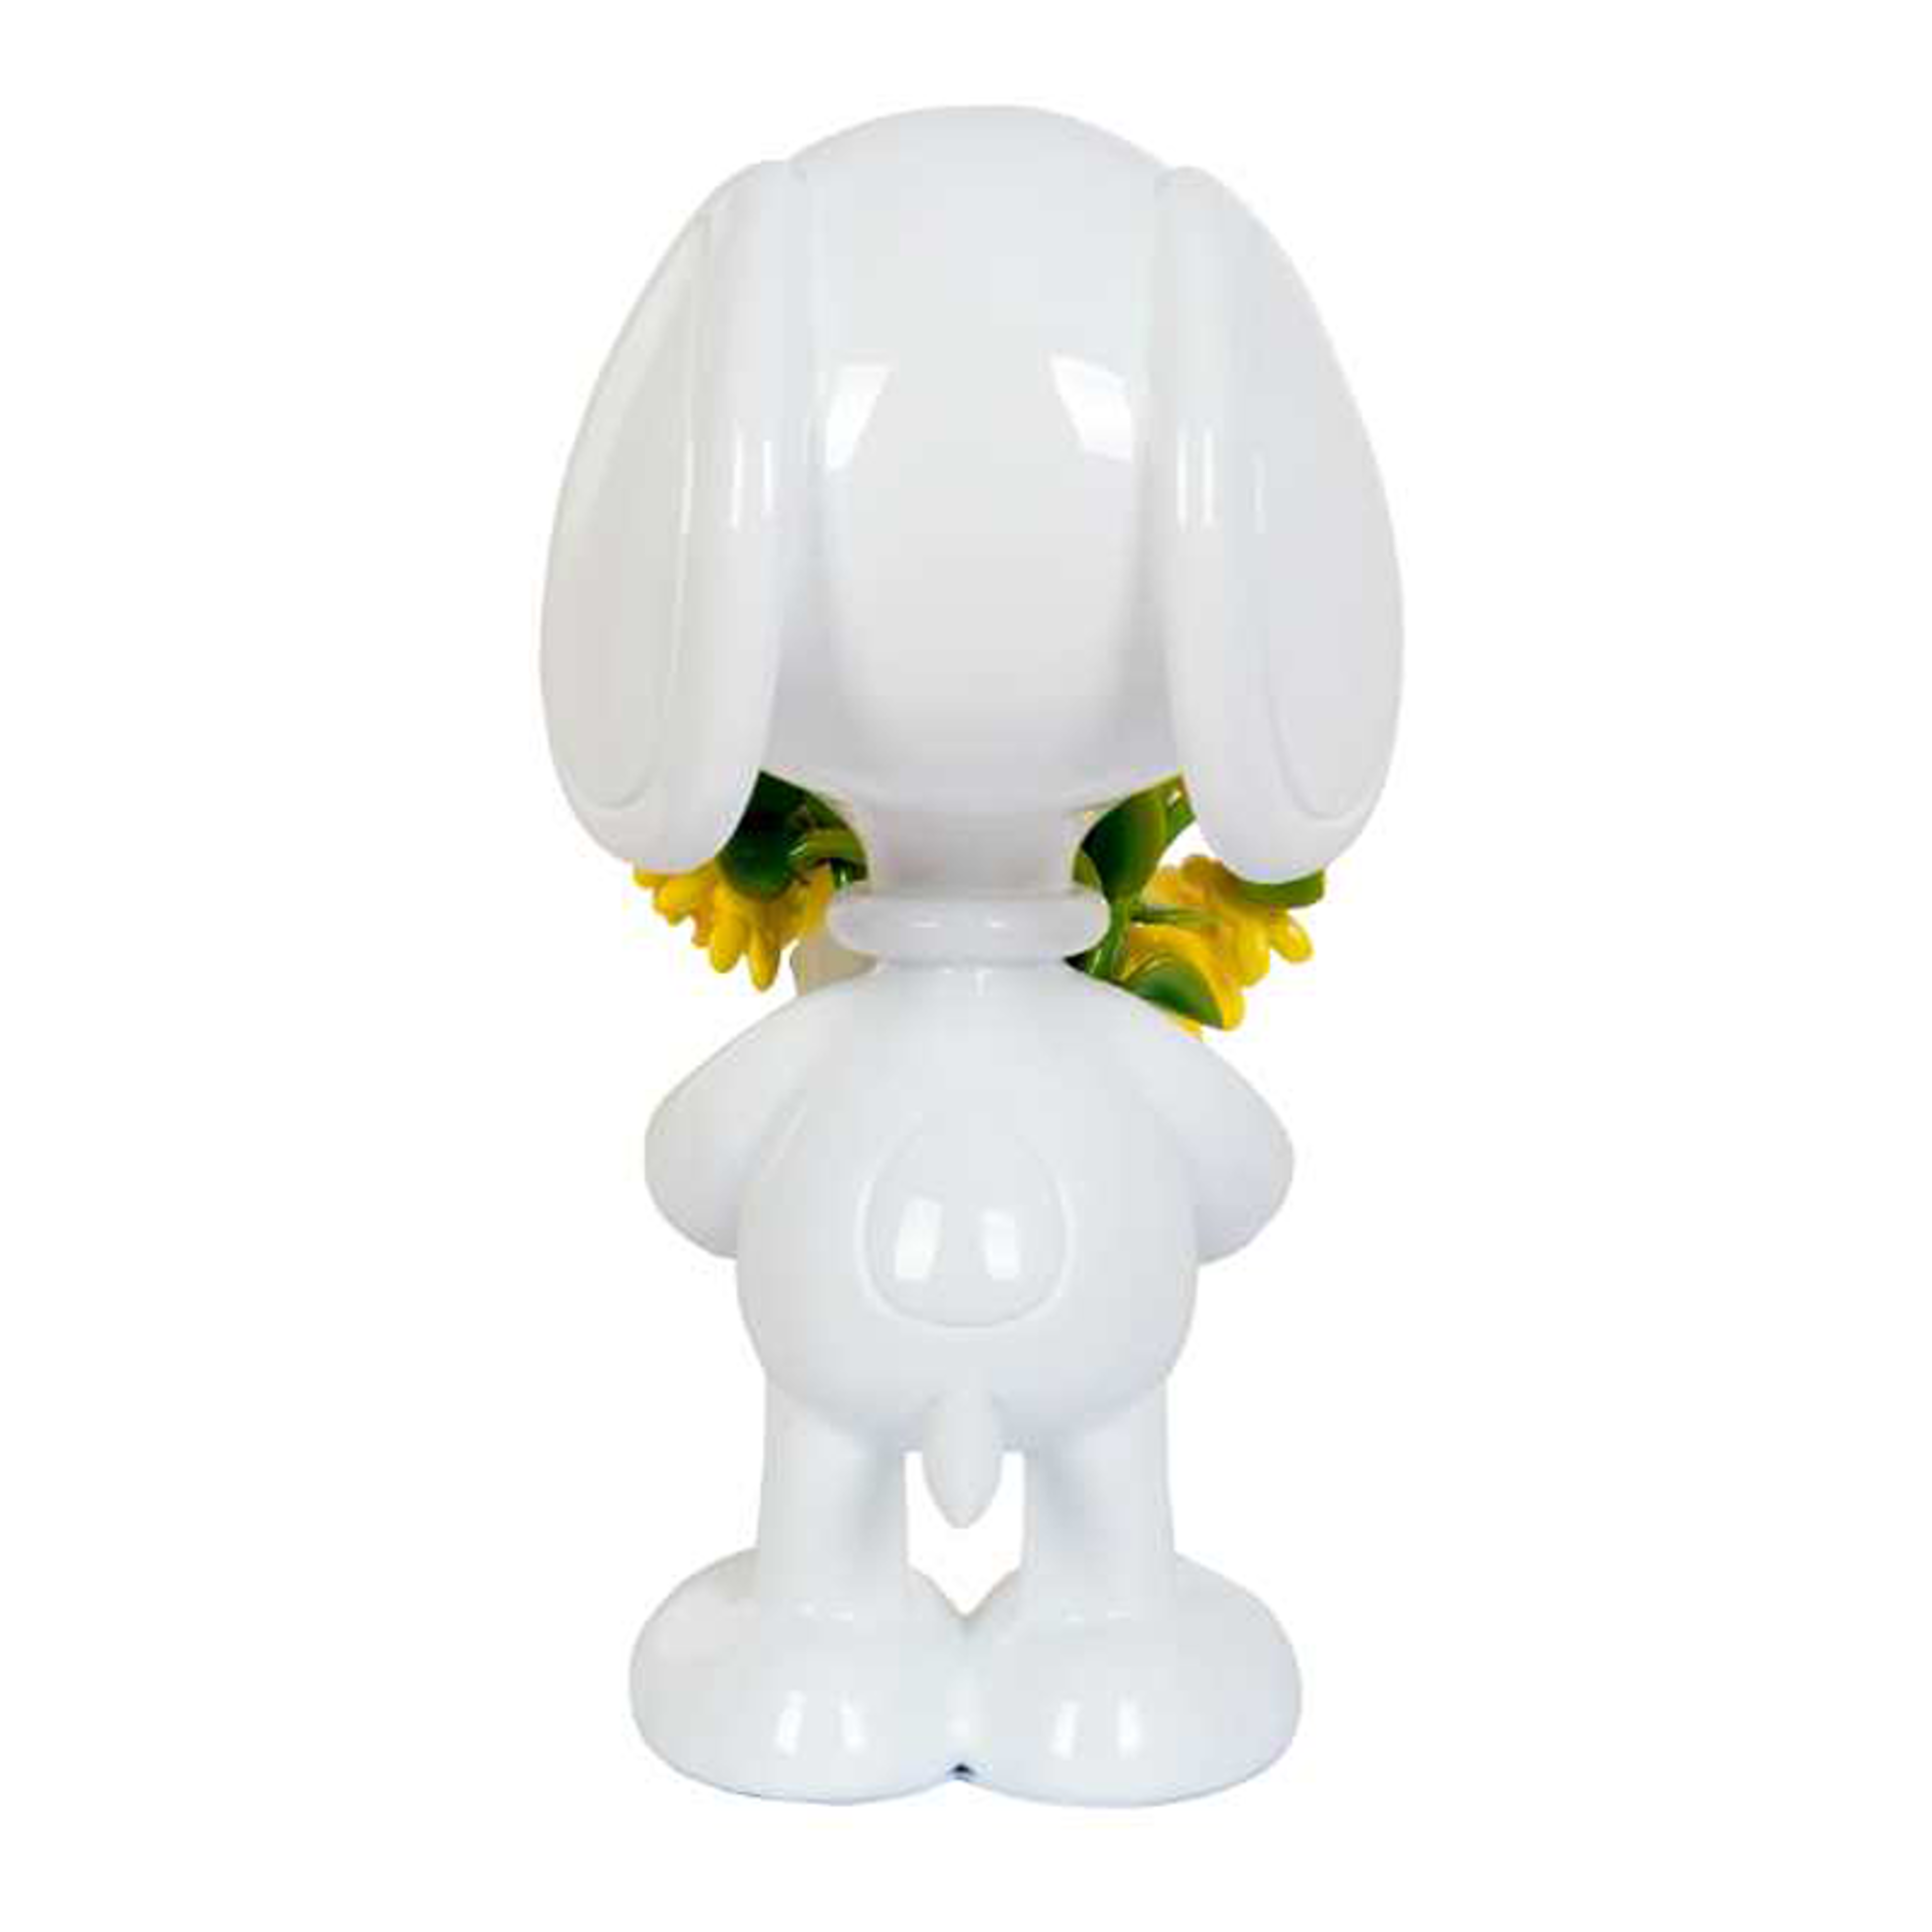 Alternate View 2 of Snoopy Gloss White | Flower